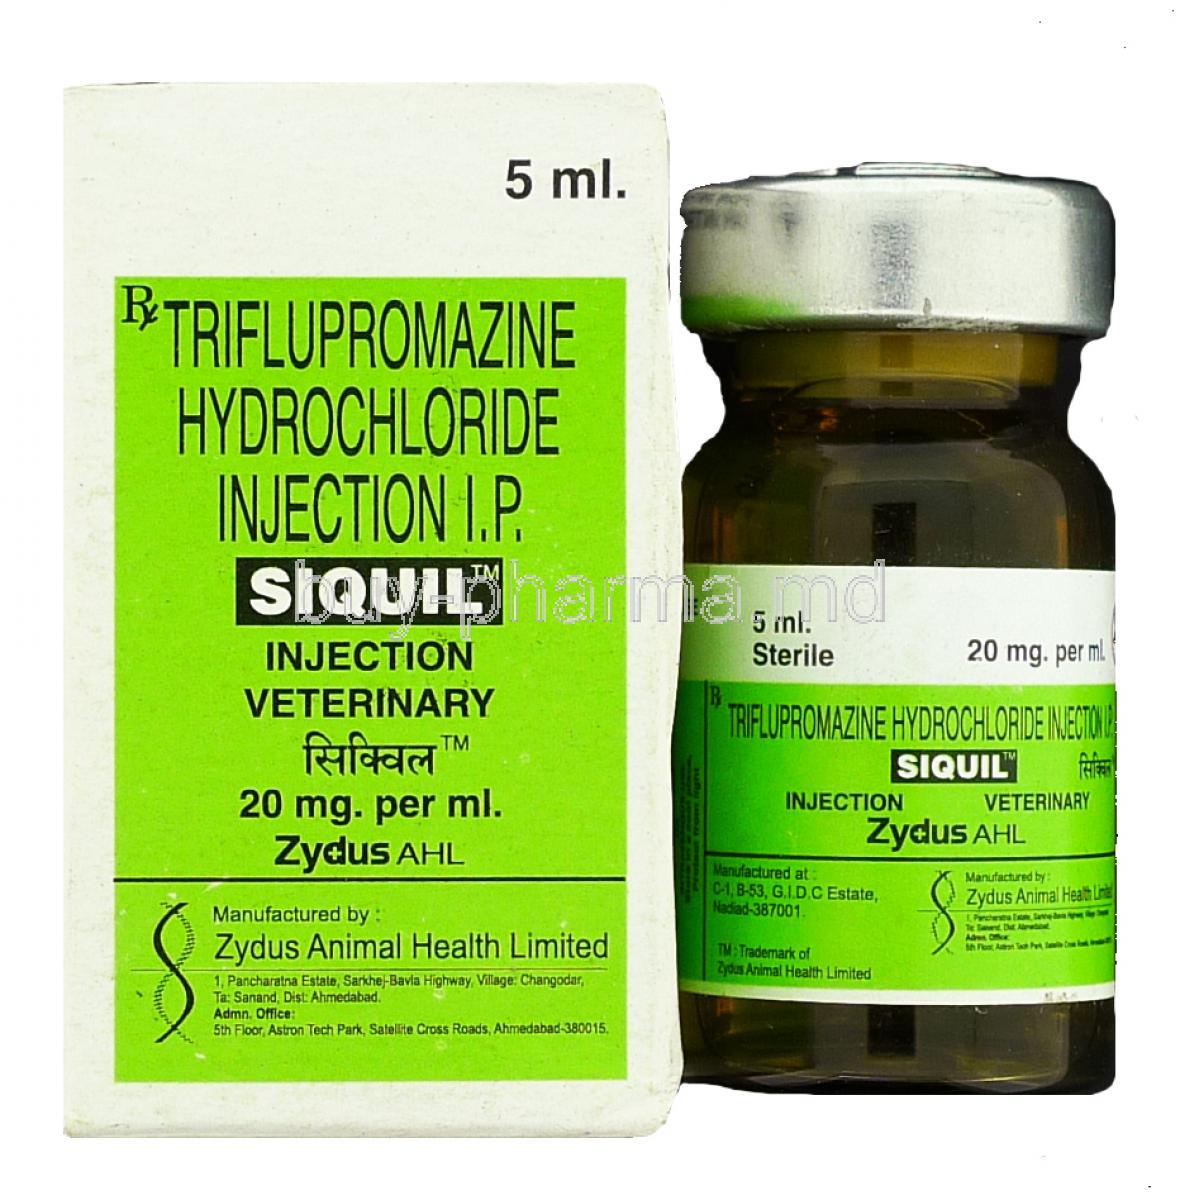 Siquil (Pet), Generic Vesprin, Triflupromazine Injection